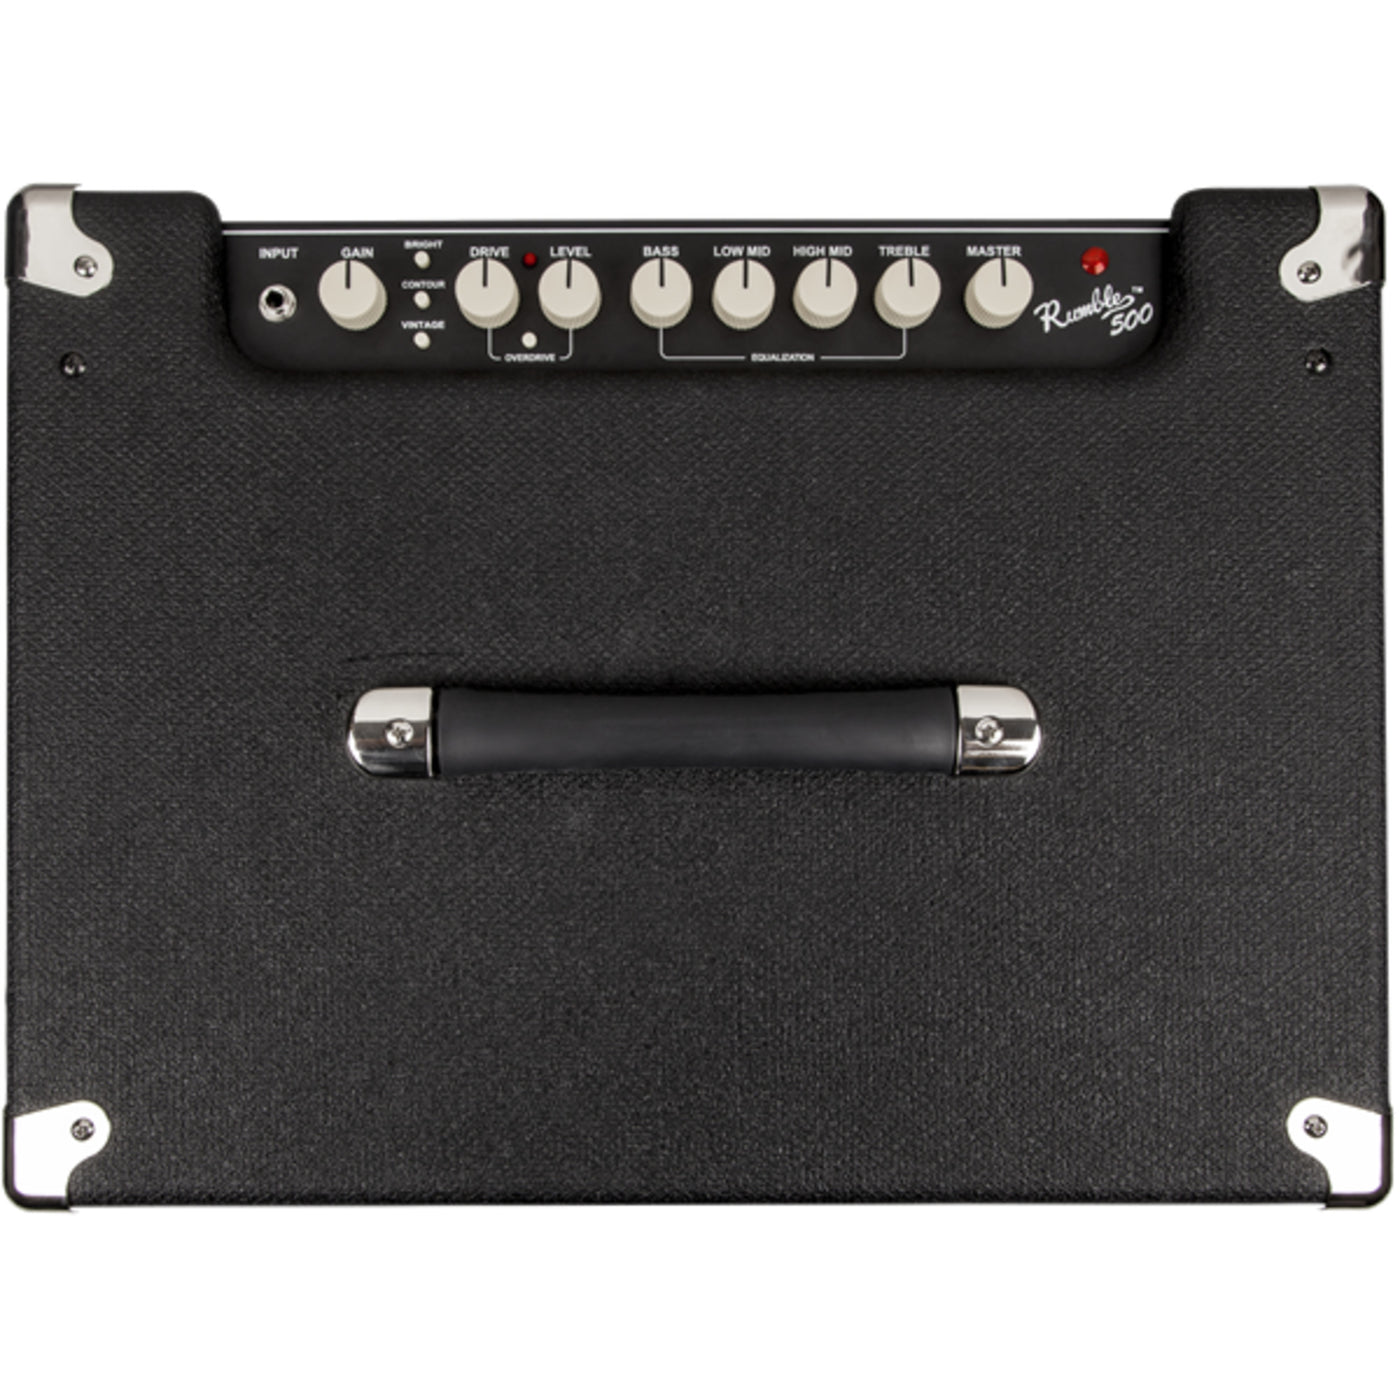 Fender Rumble 500 Bass Combo 120V, Black/Silver (2370600000)